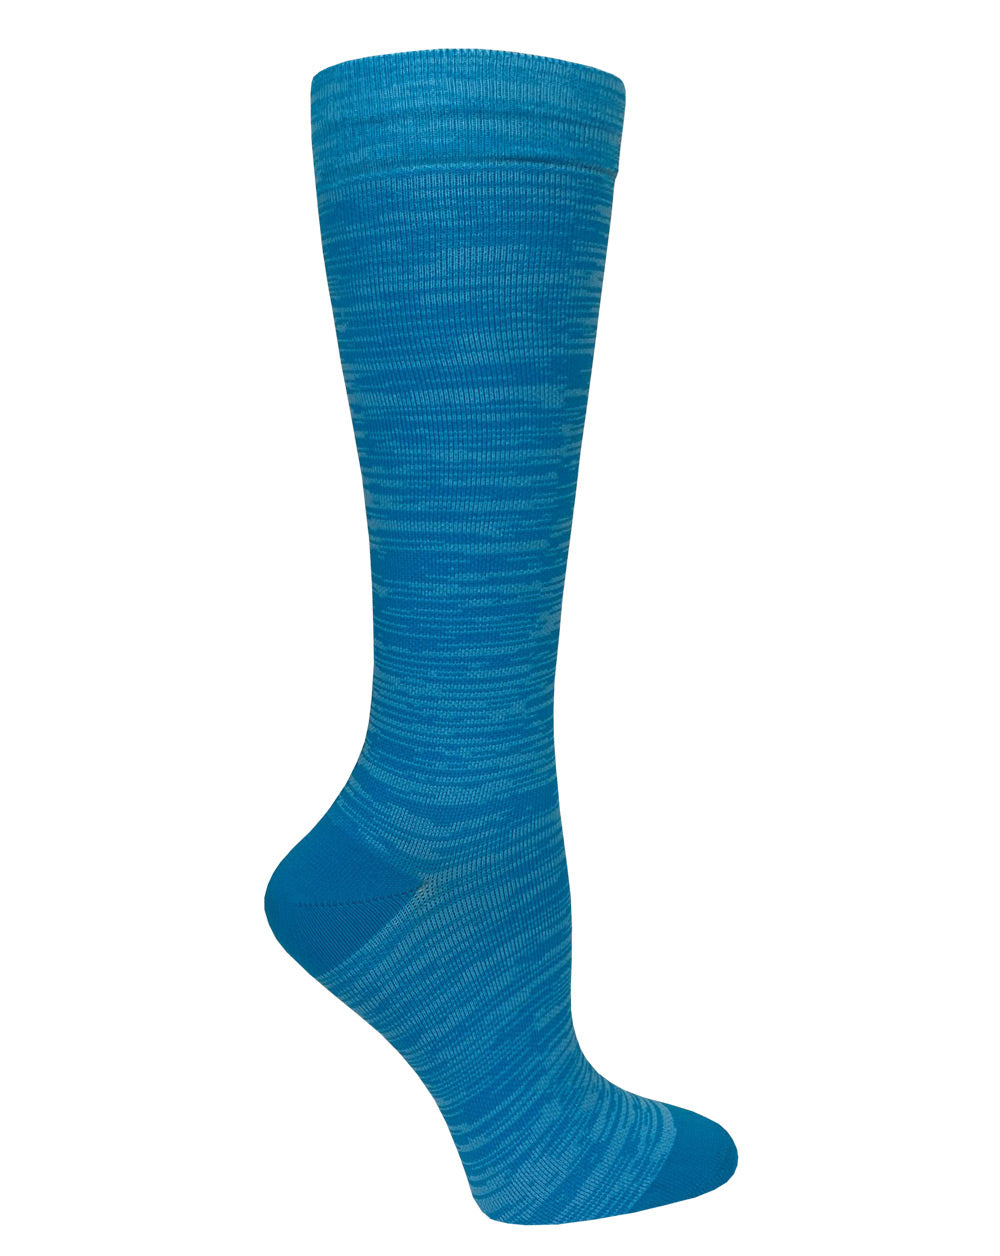 12" Premium Knit Compression Socks by Prestige / Static Blue